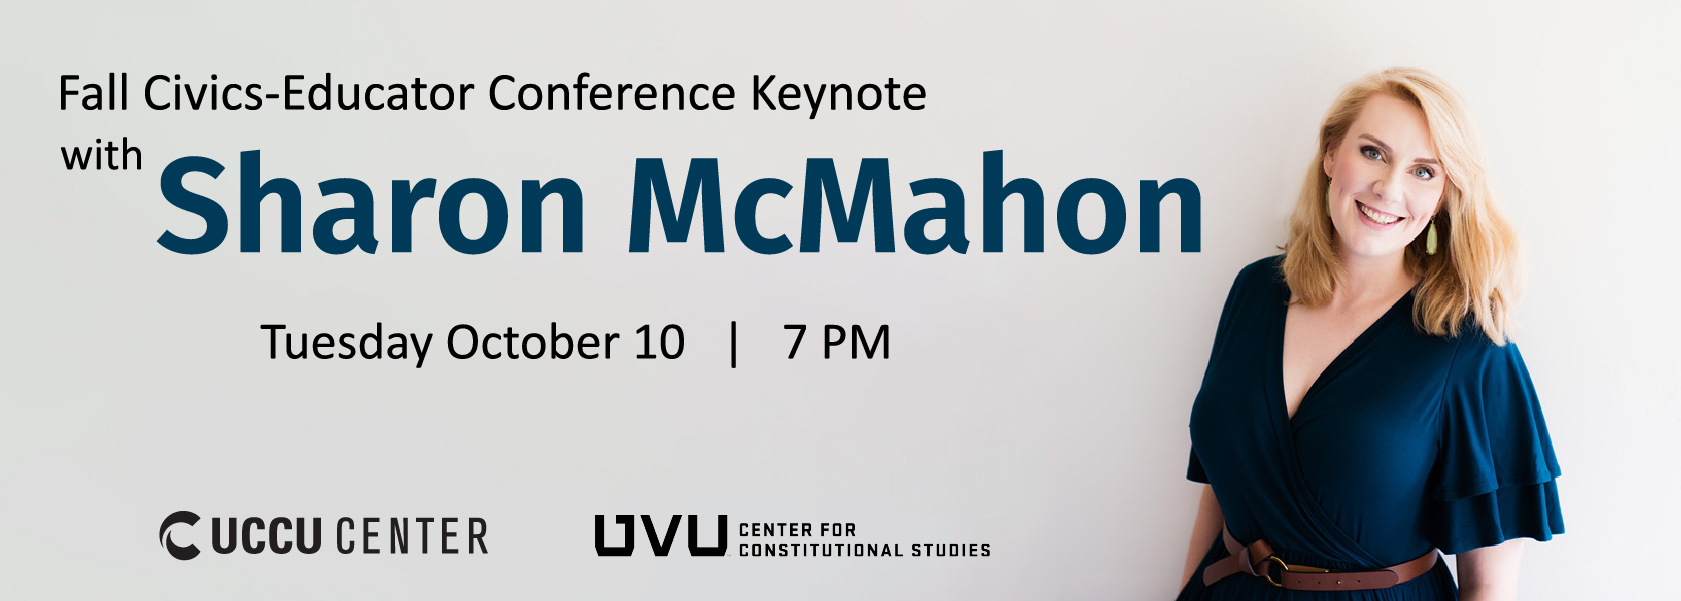 Sharon McMahon delivers the Fall Civics-Educator Keynote address